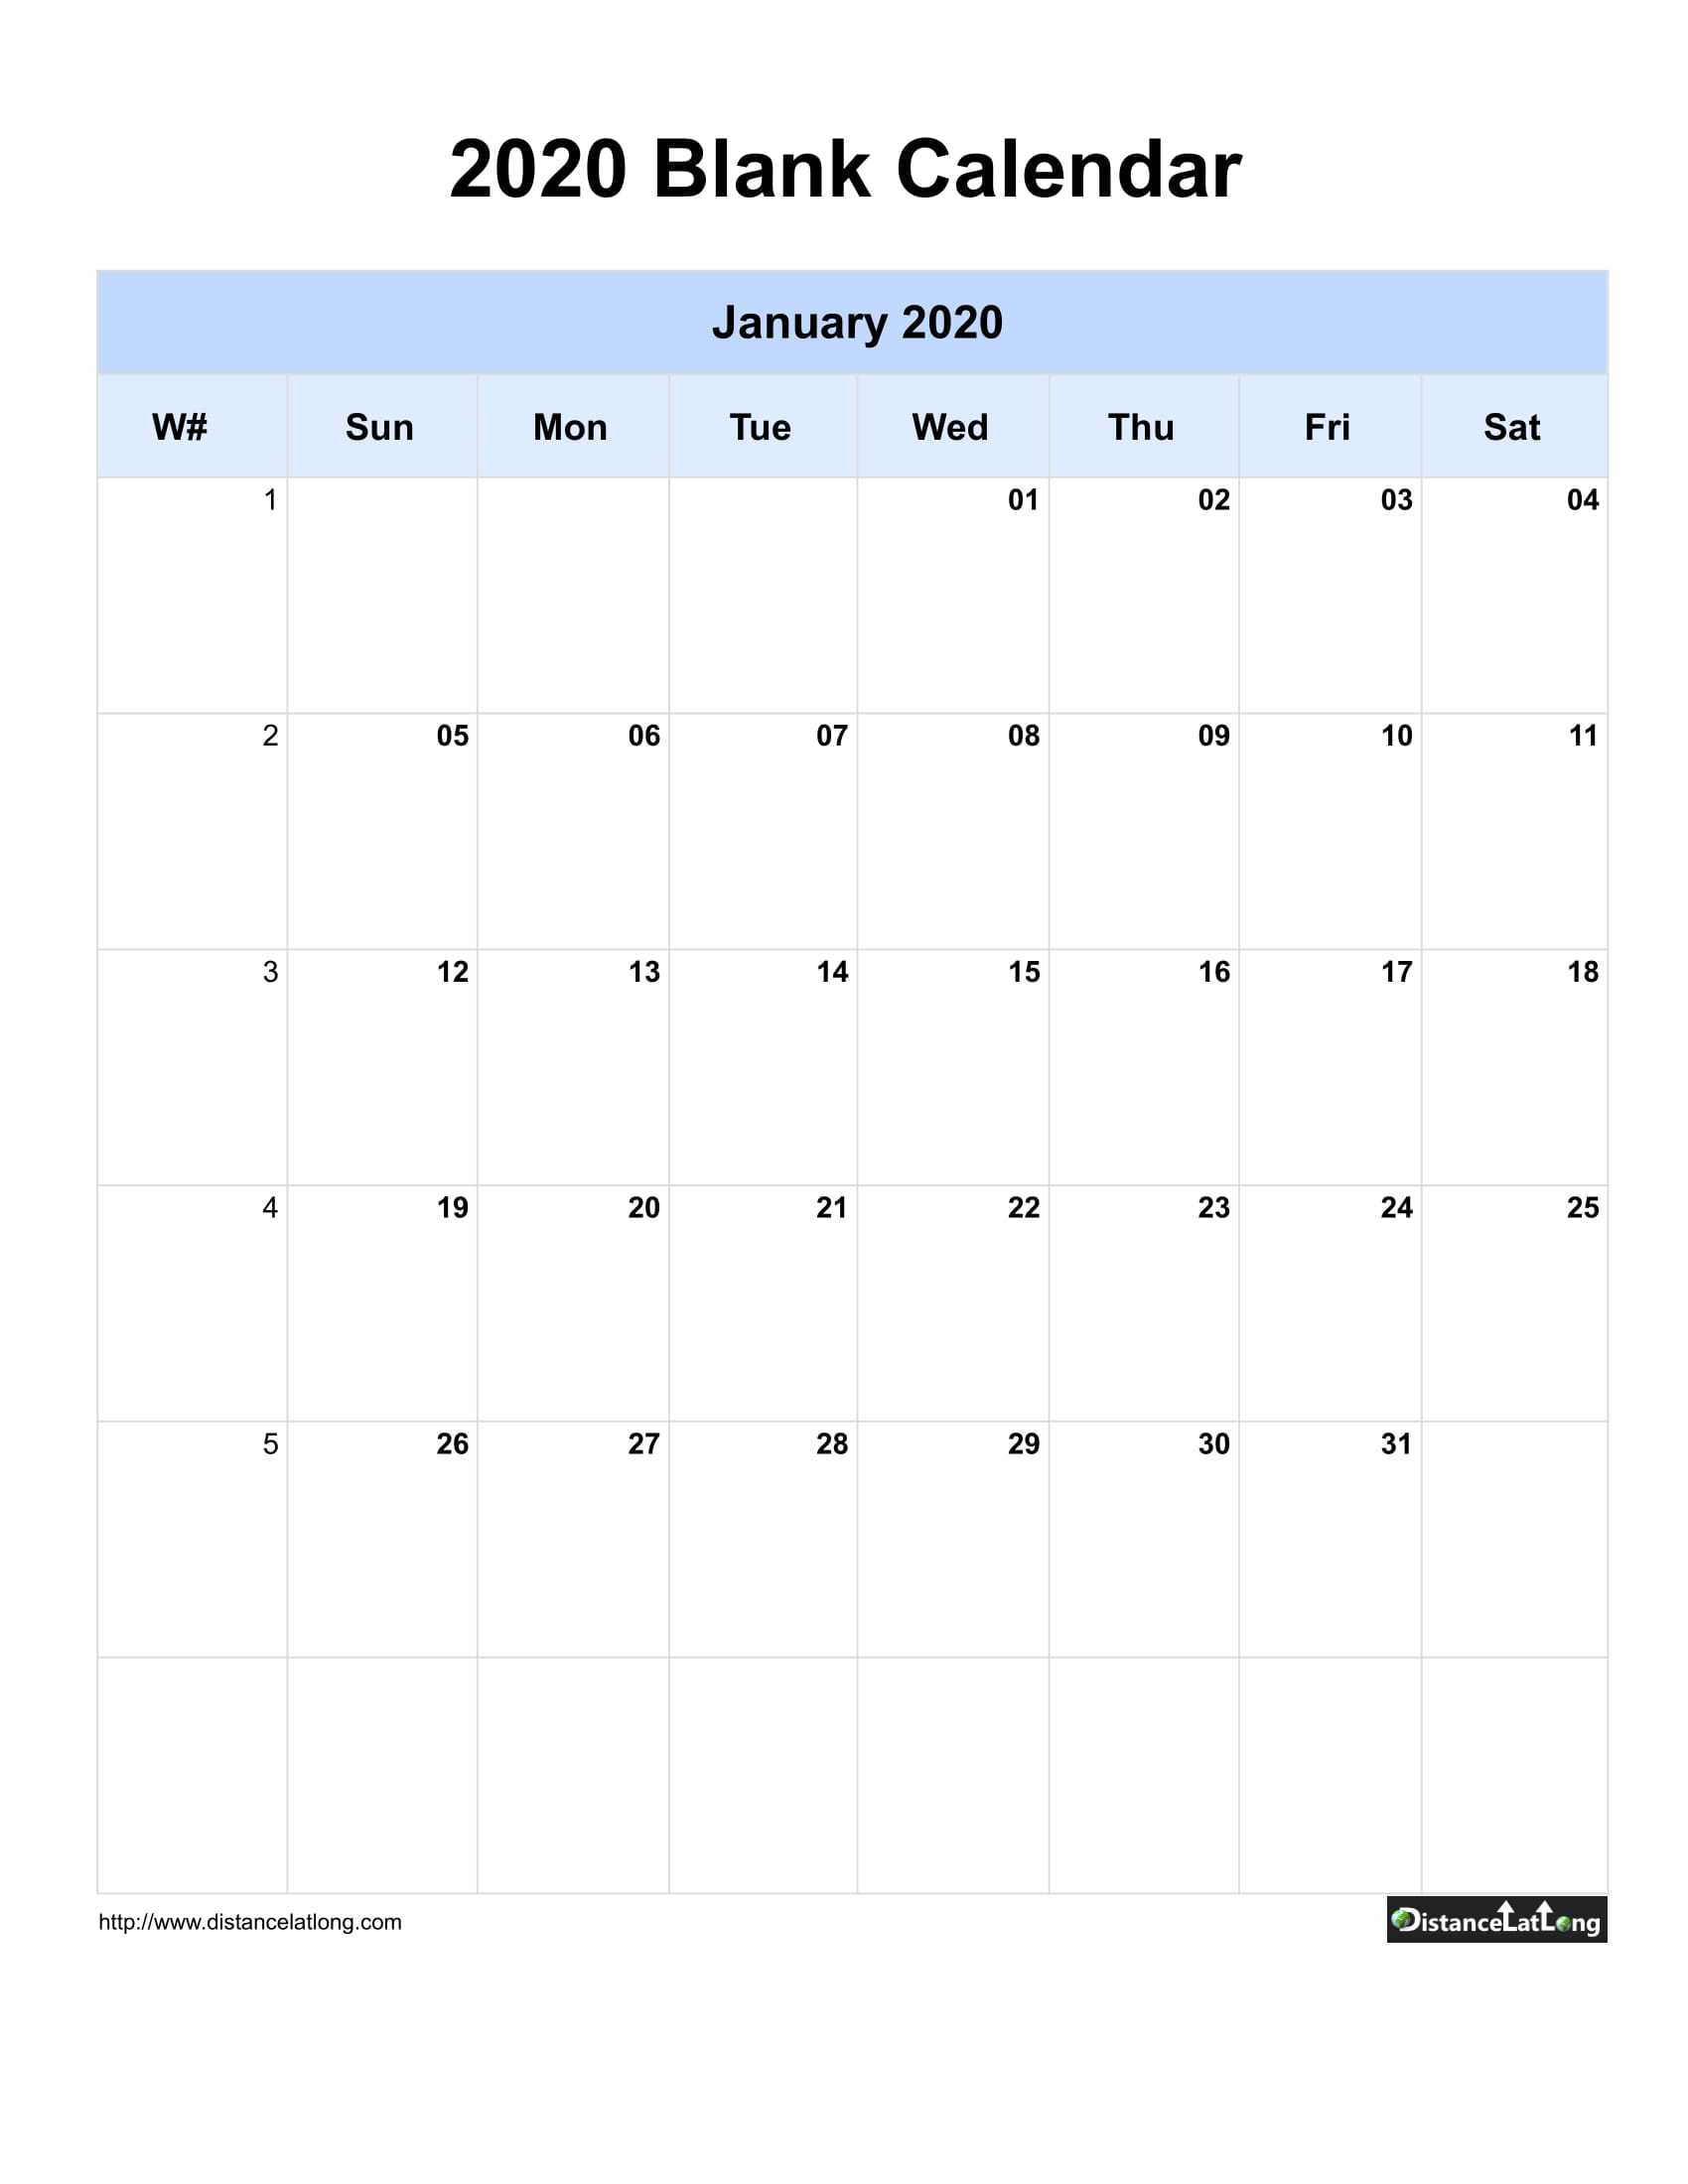 2020 Blank Calendar Blank Portrait Orientation Free For Blank Calender Template